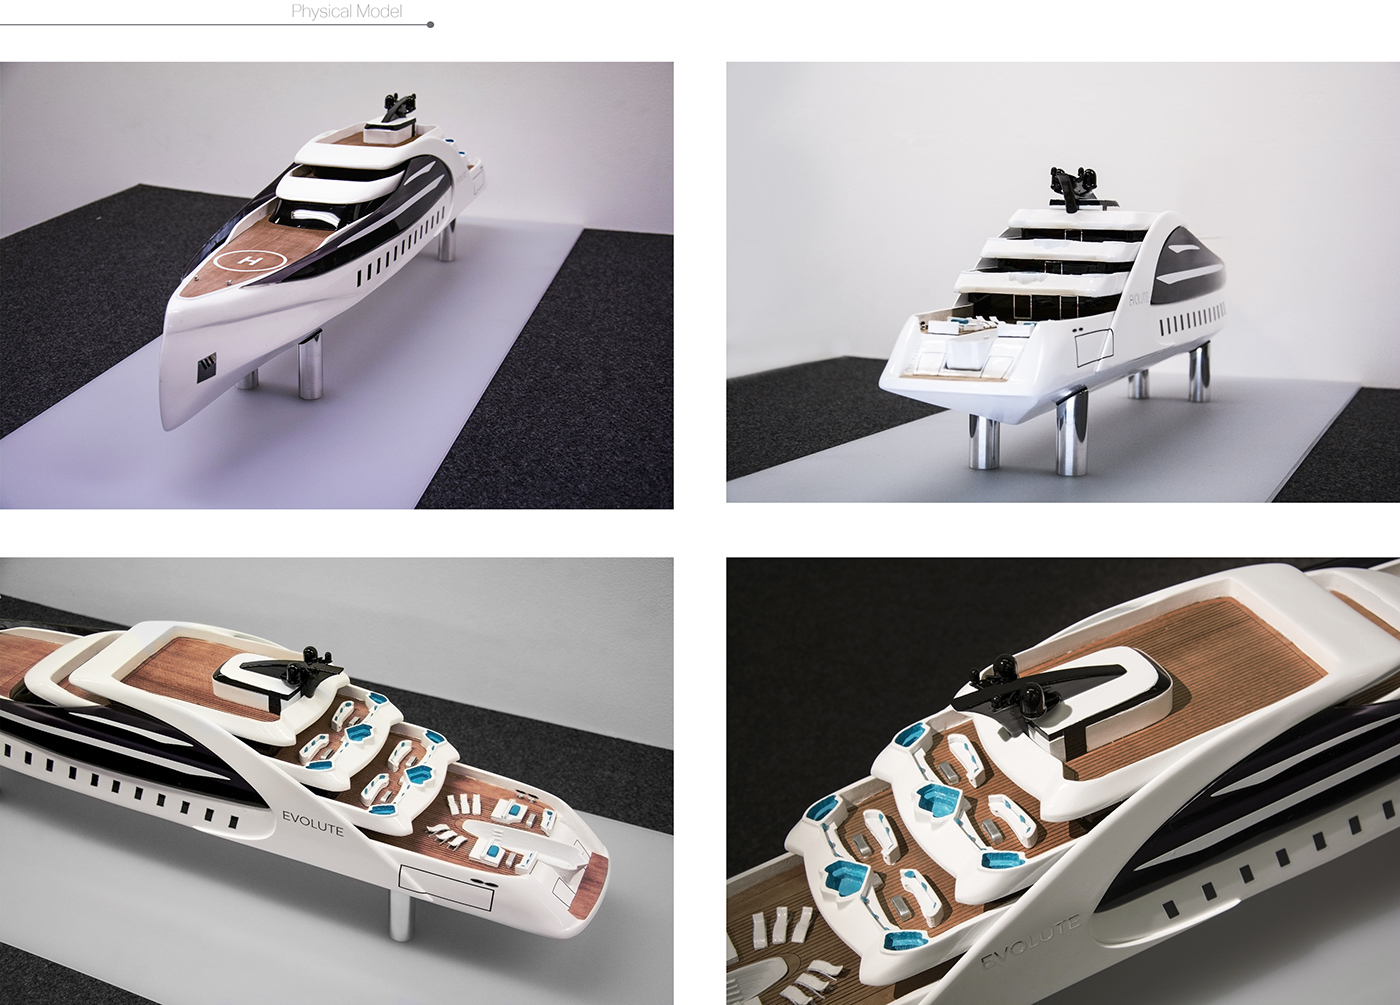 Evolute超级生态游艇概念设计